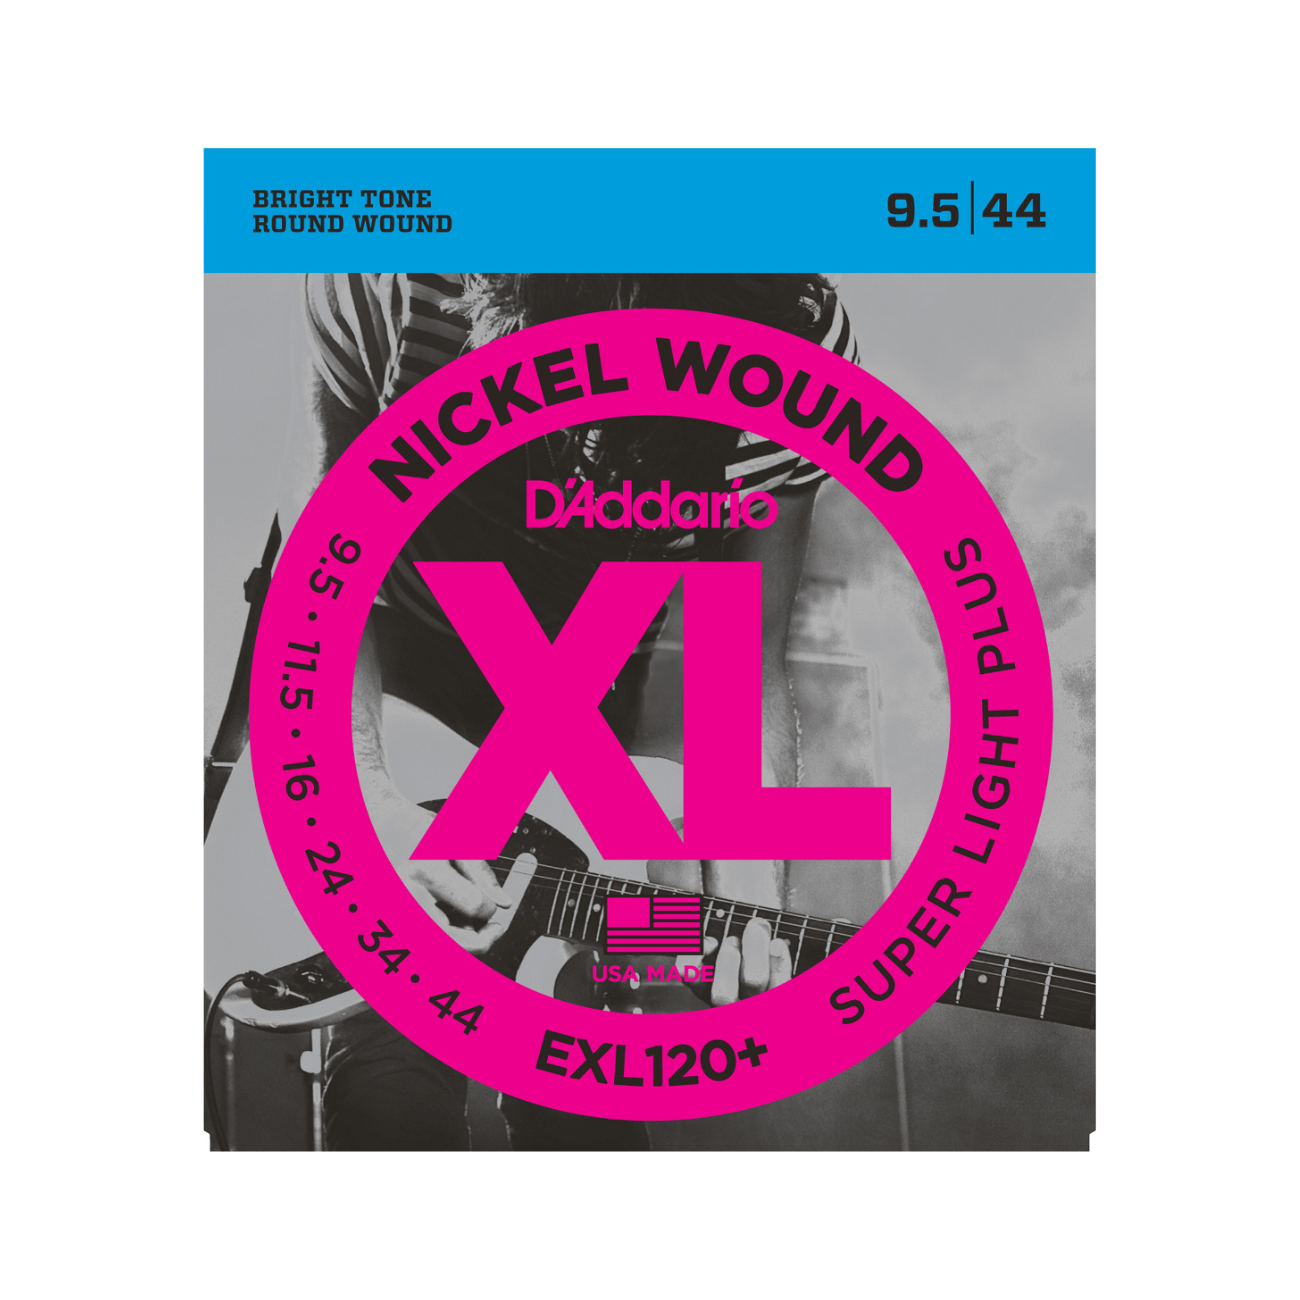 D'Addario EXL120+ | Nickel Wound Electric Guitar Strings 9.5-44 Super Light + Gauge